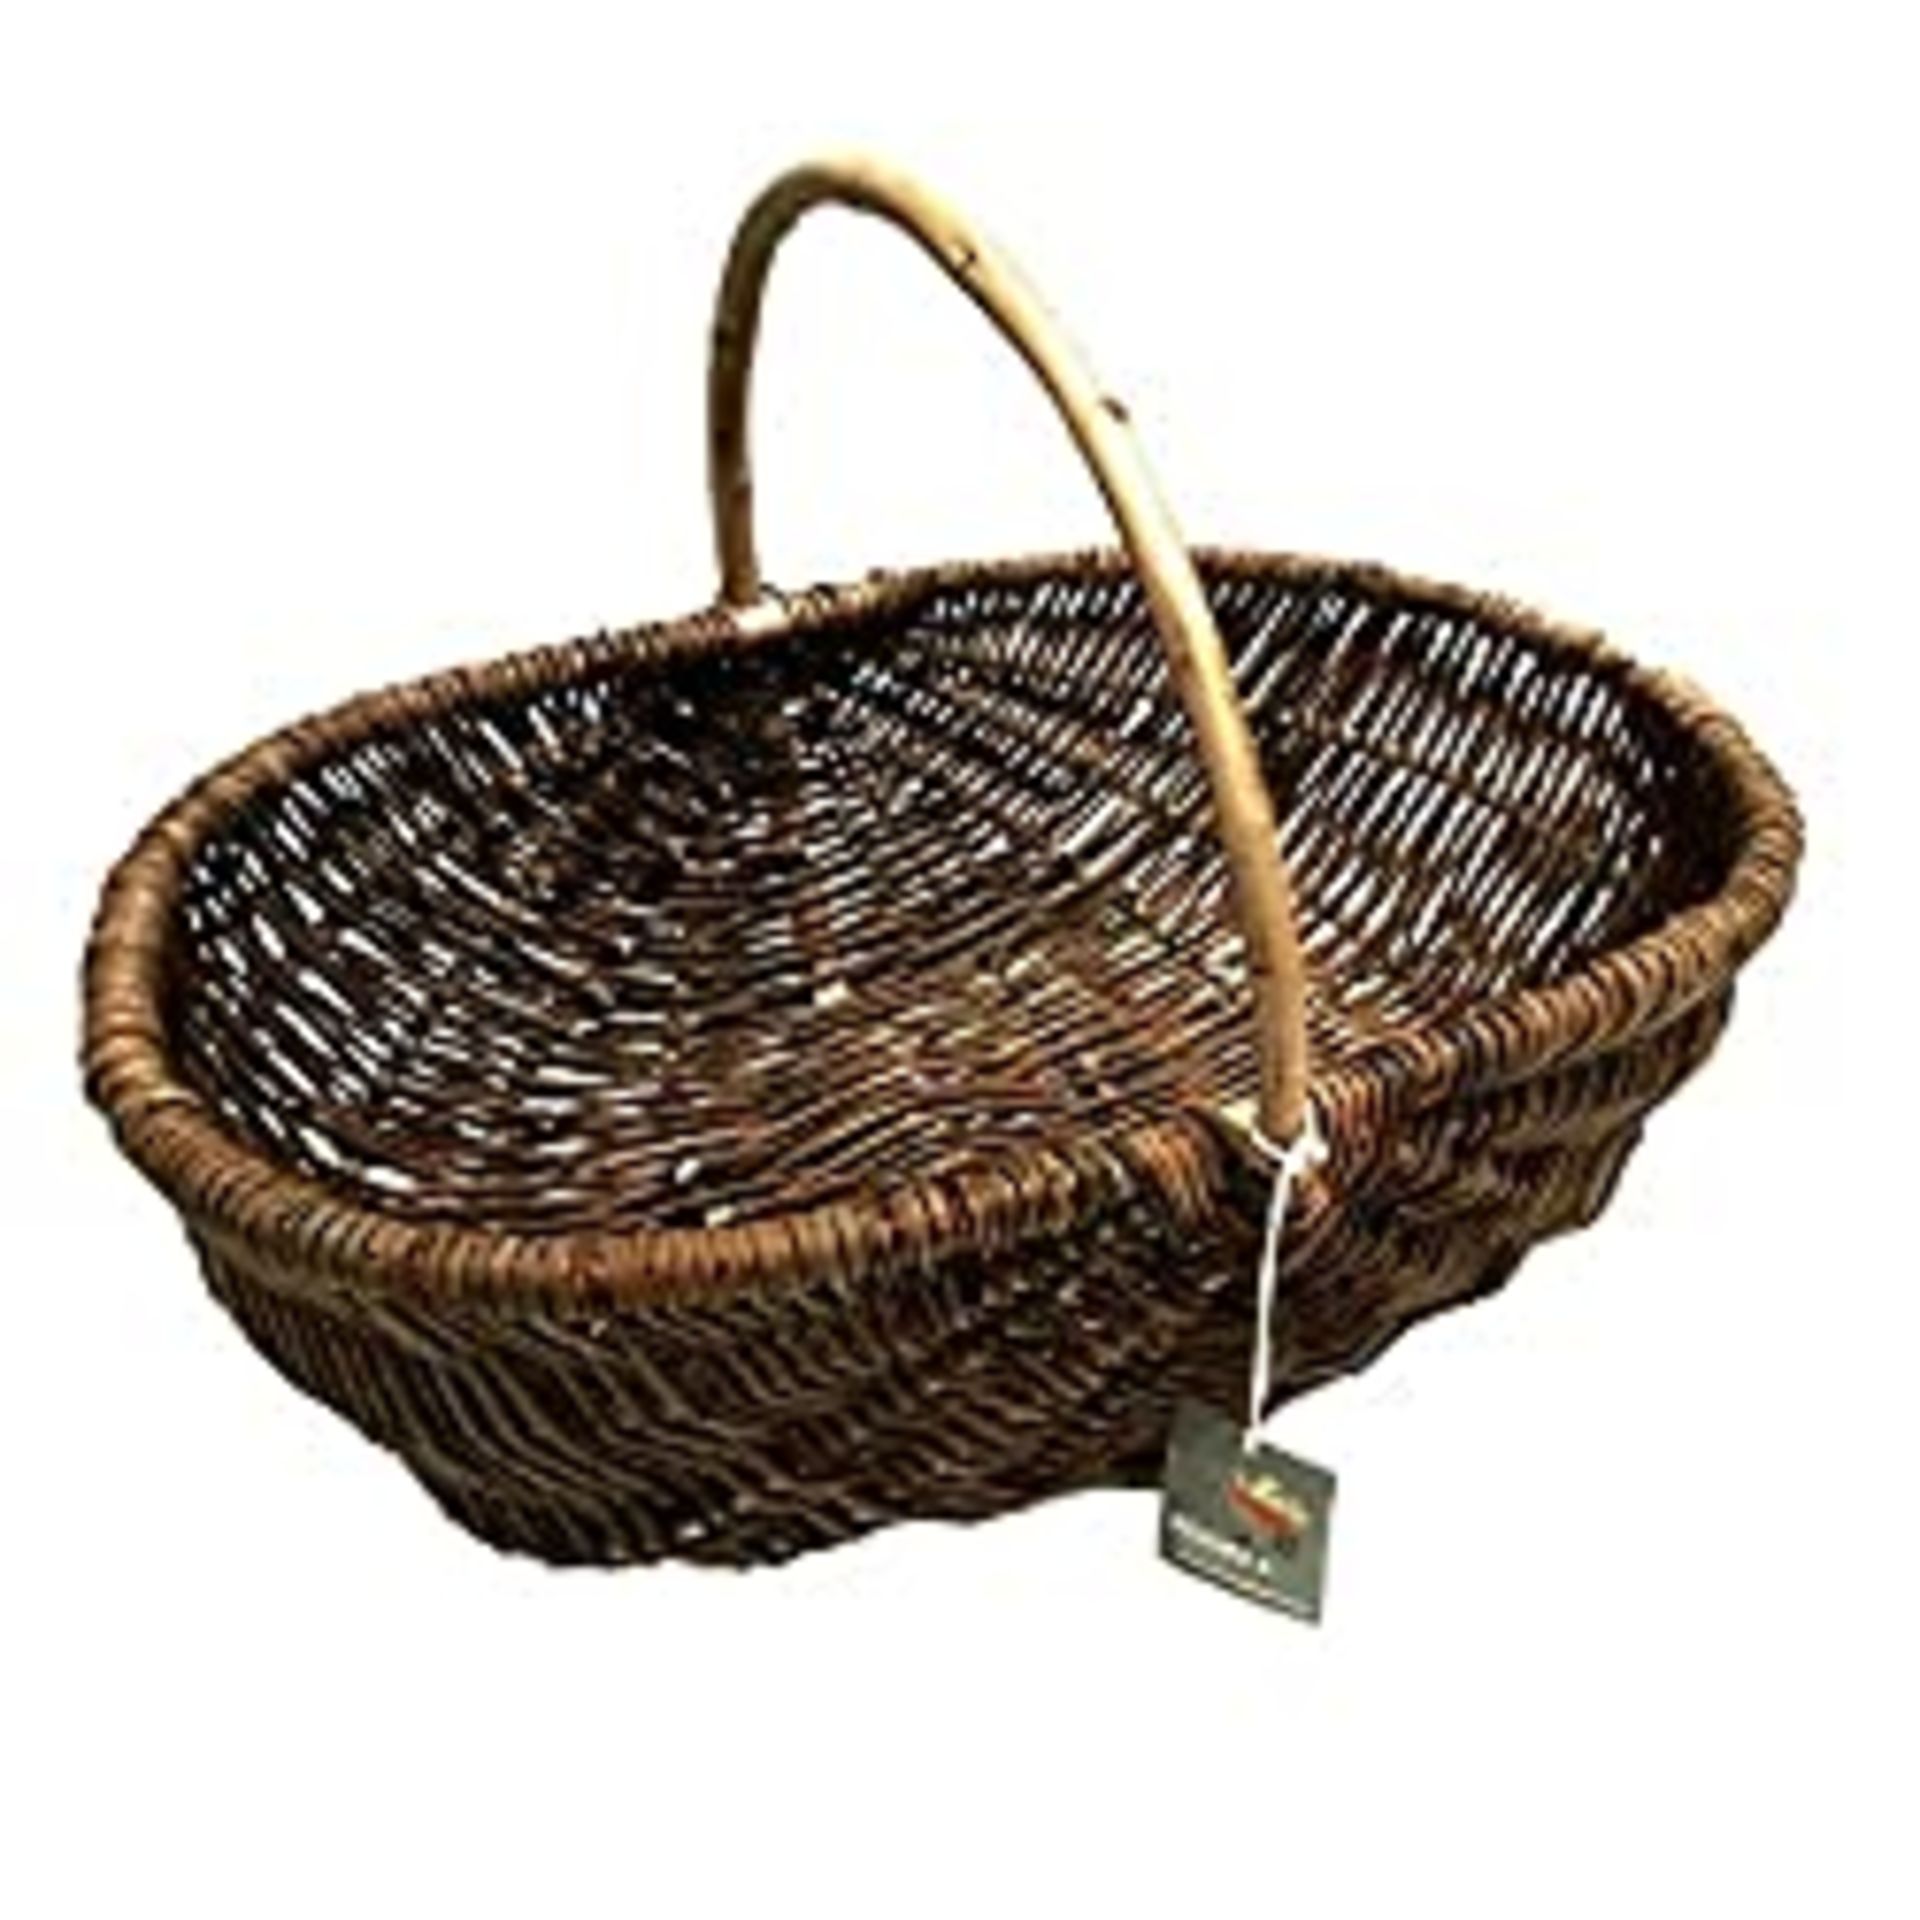 RRP £30.95 Nutley's Large Rustic Willow Vegetable Trug Basket